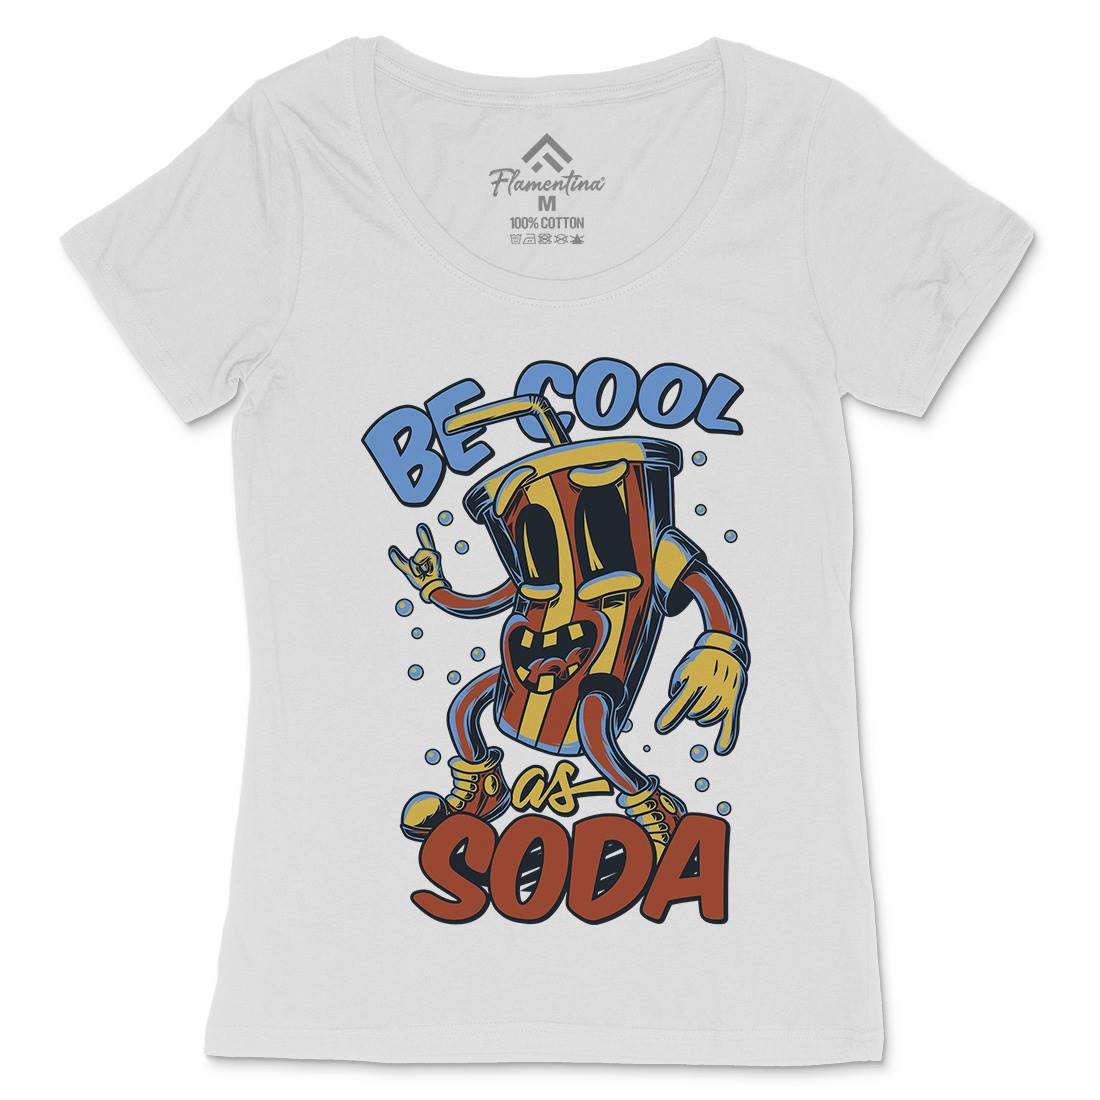 Soda Womens Scoop Neck T-Shirt Drinks C824